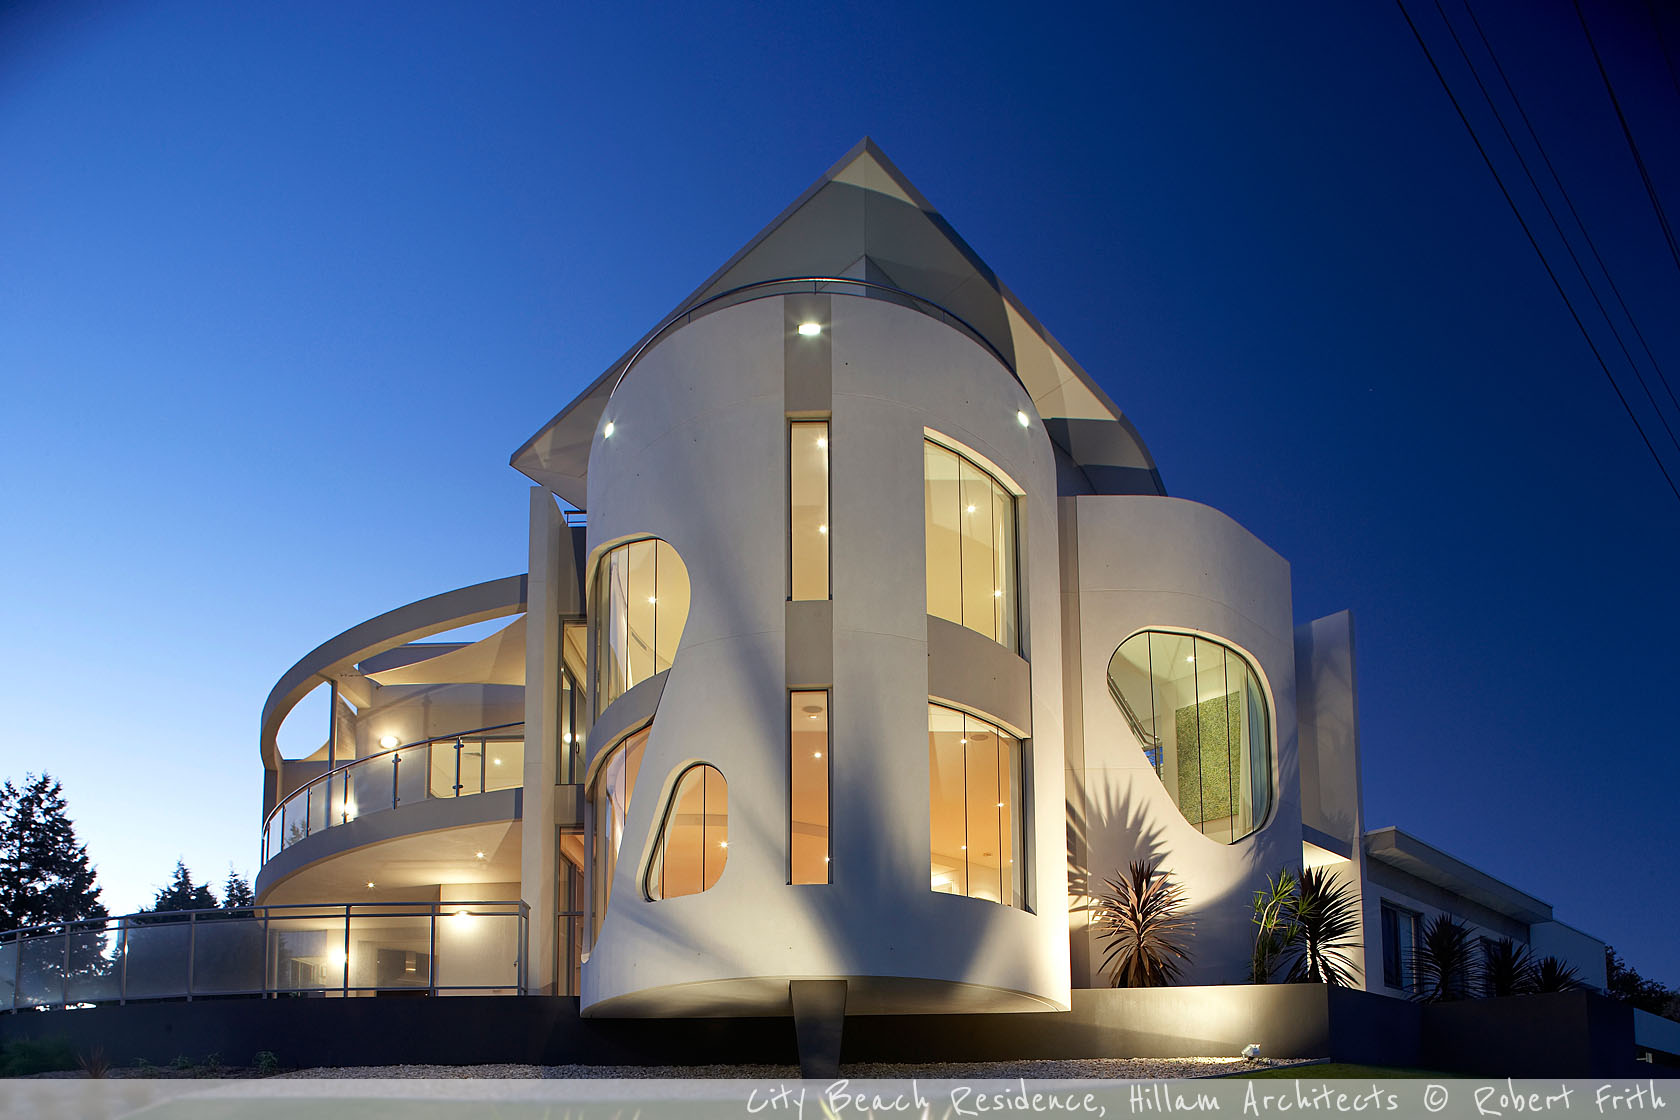 City Beach Residence,Hillam Architects